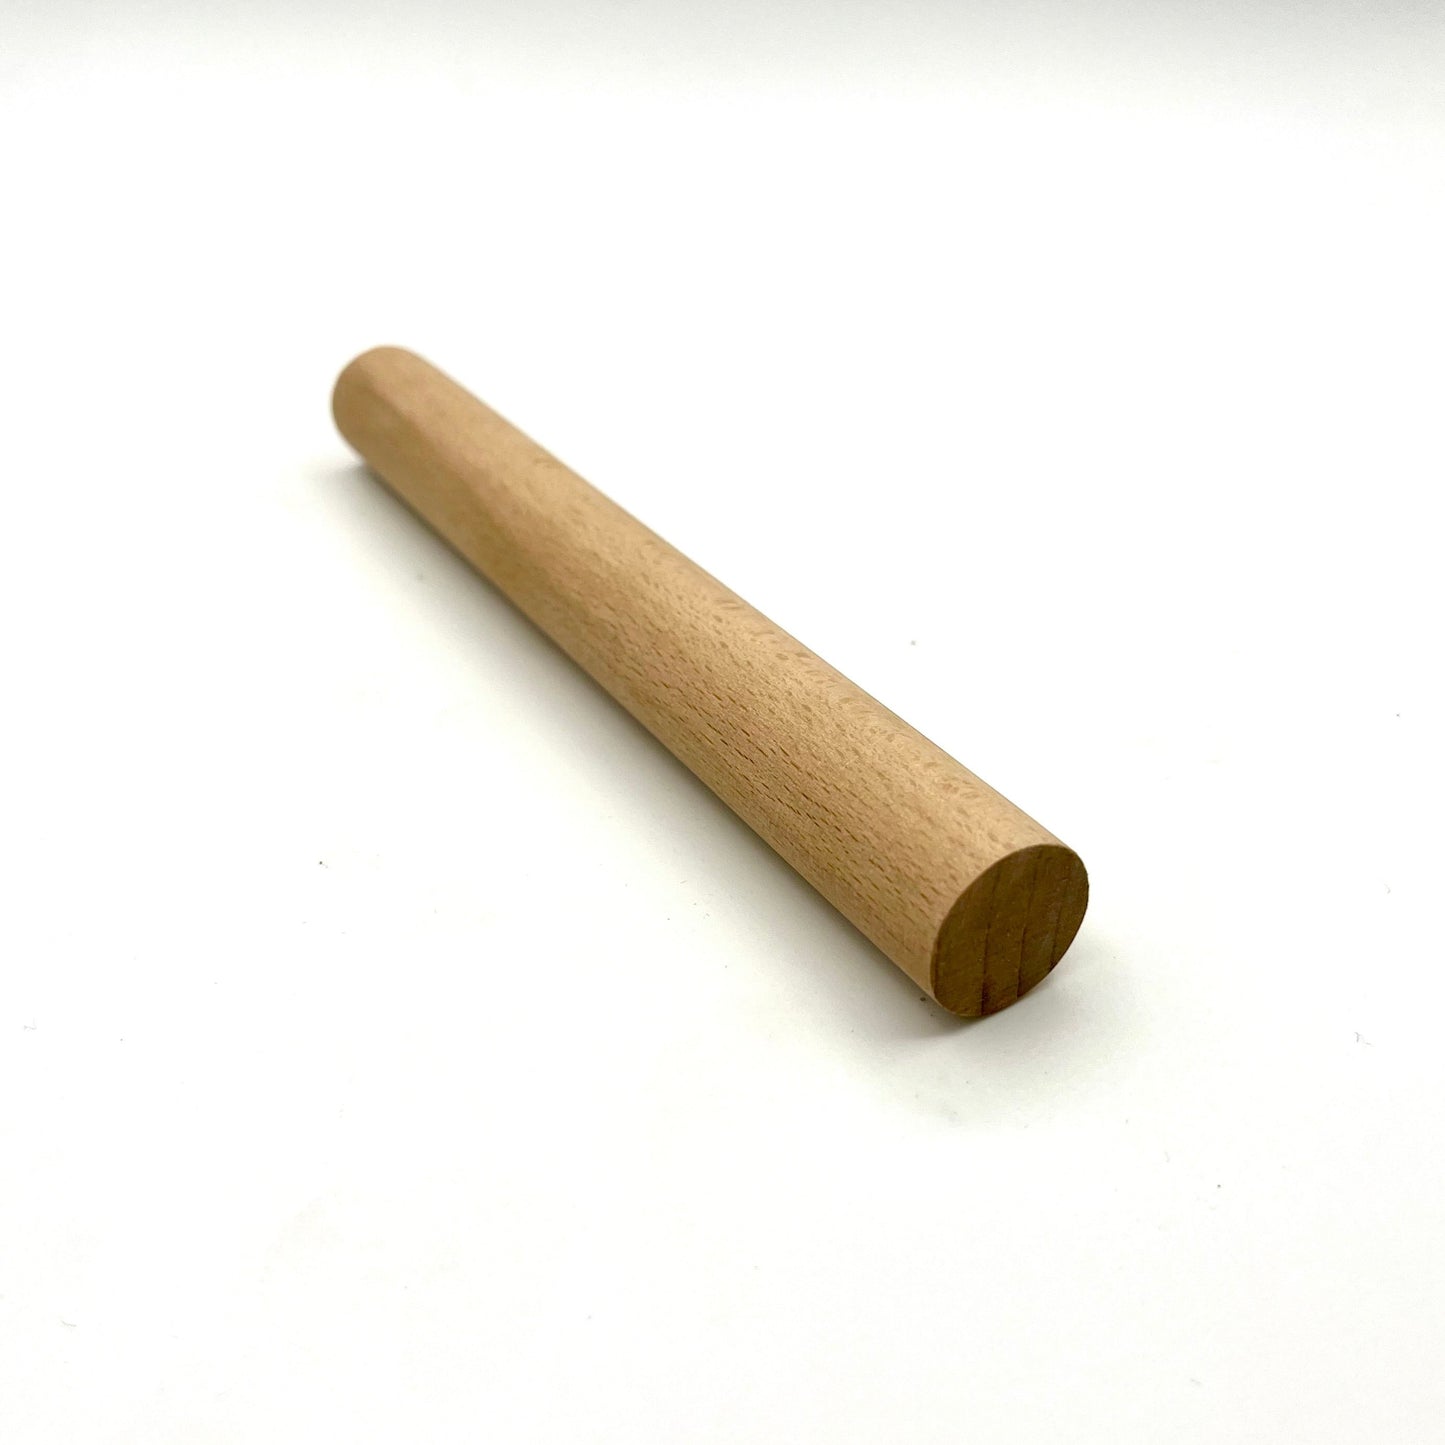 Wooden Dowel Rod - Mandrel Alternative